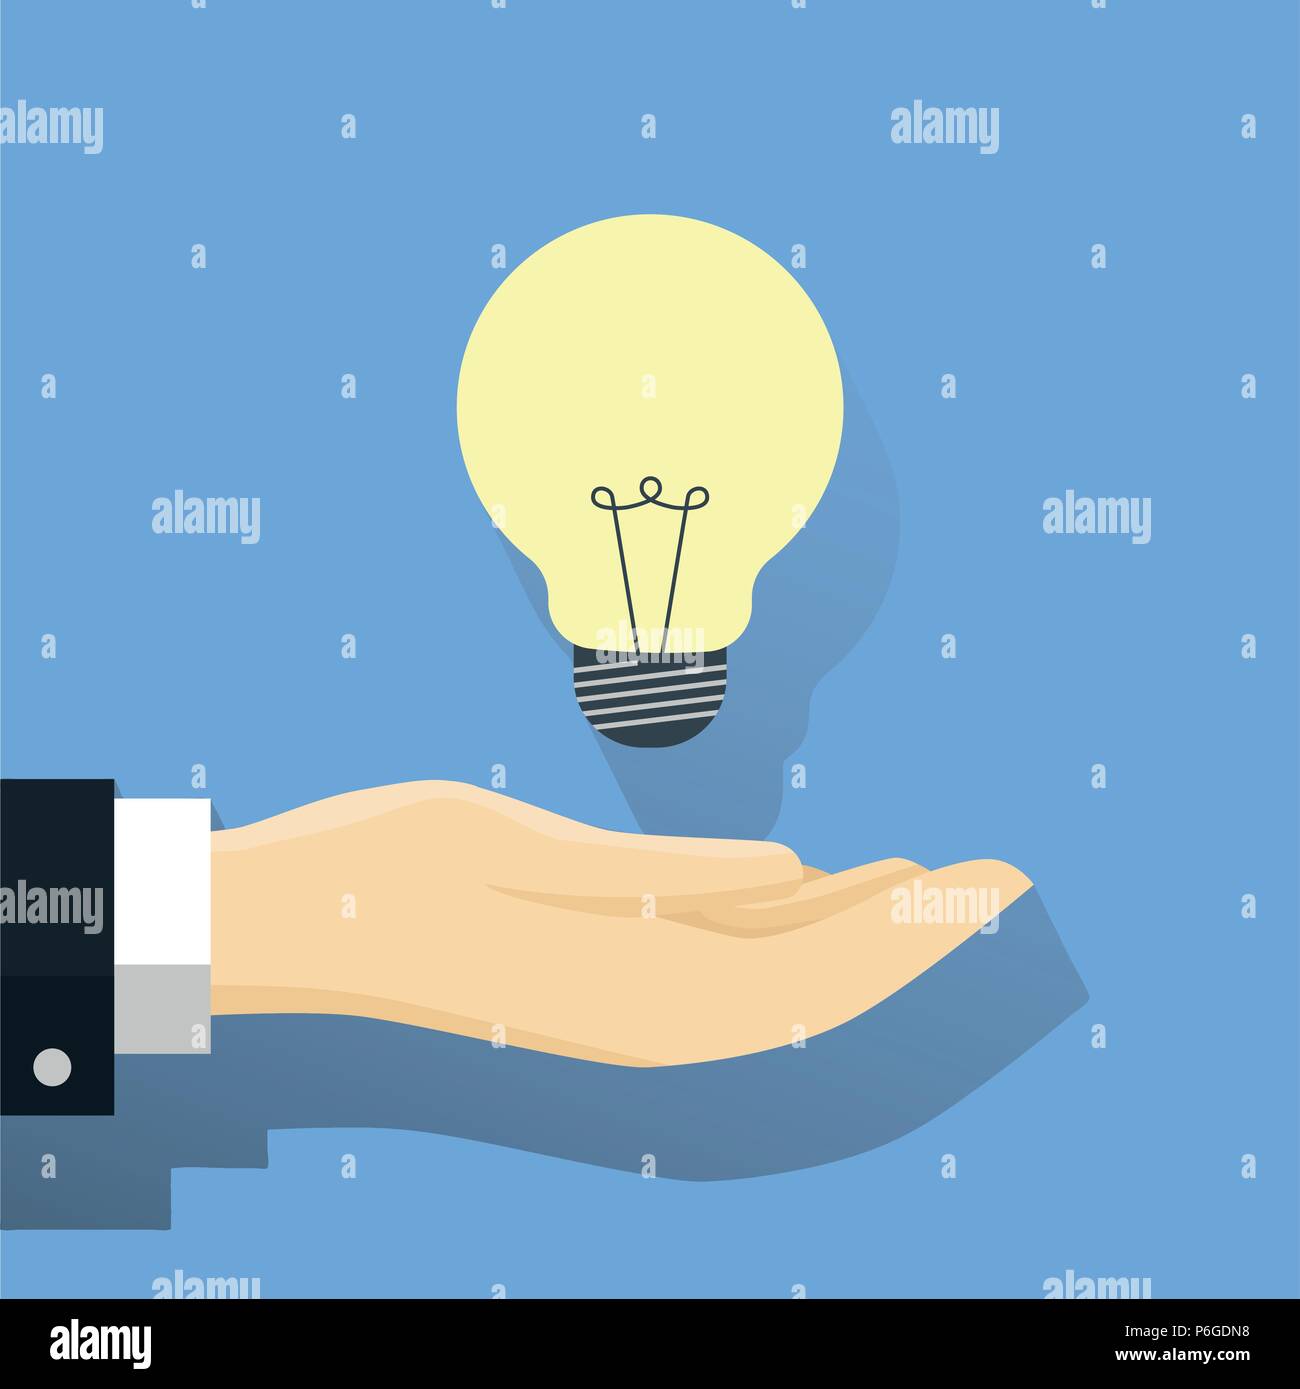 Businessman with light bulb, a hand and an idea light bulb, modern idea innovation light bulb concept. Conceptual web illustration - Flat Vector Illus Stock Vector